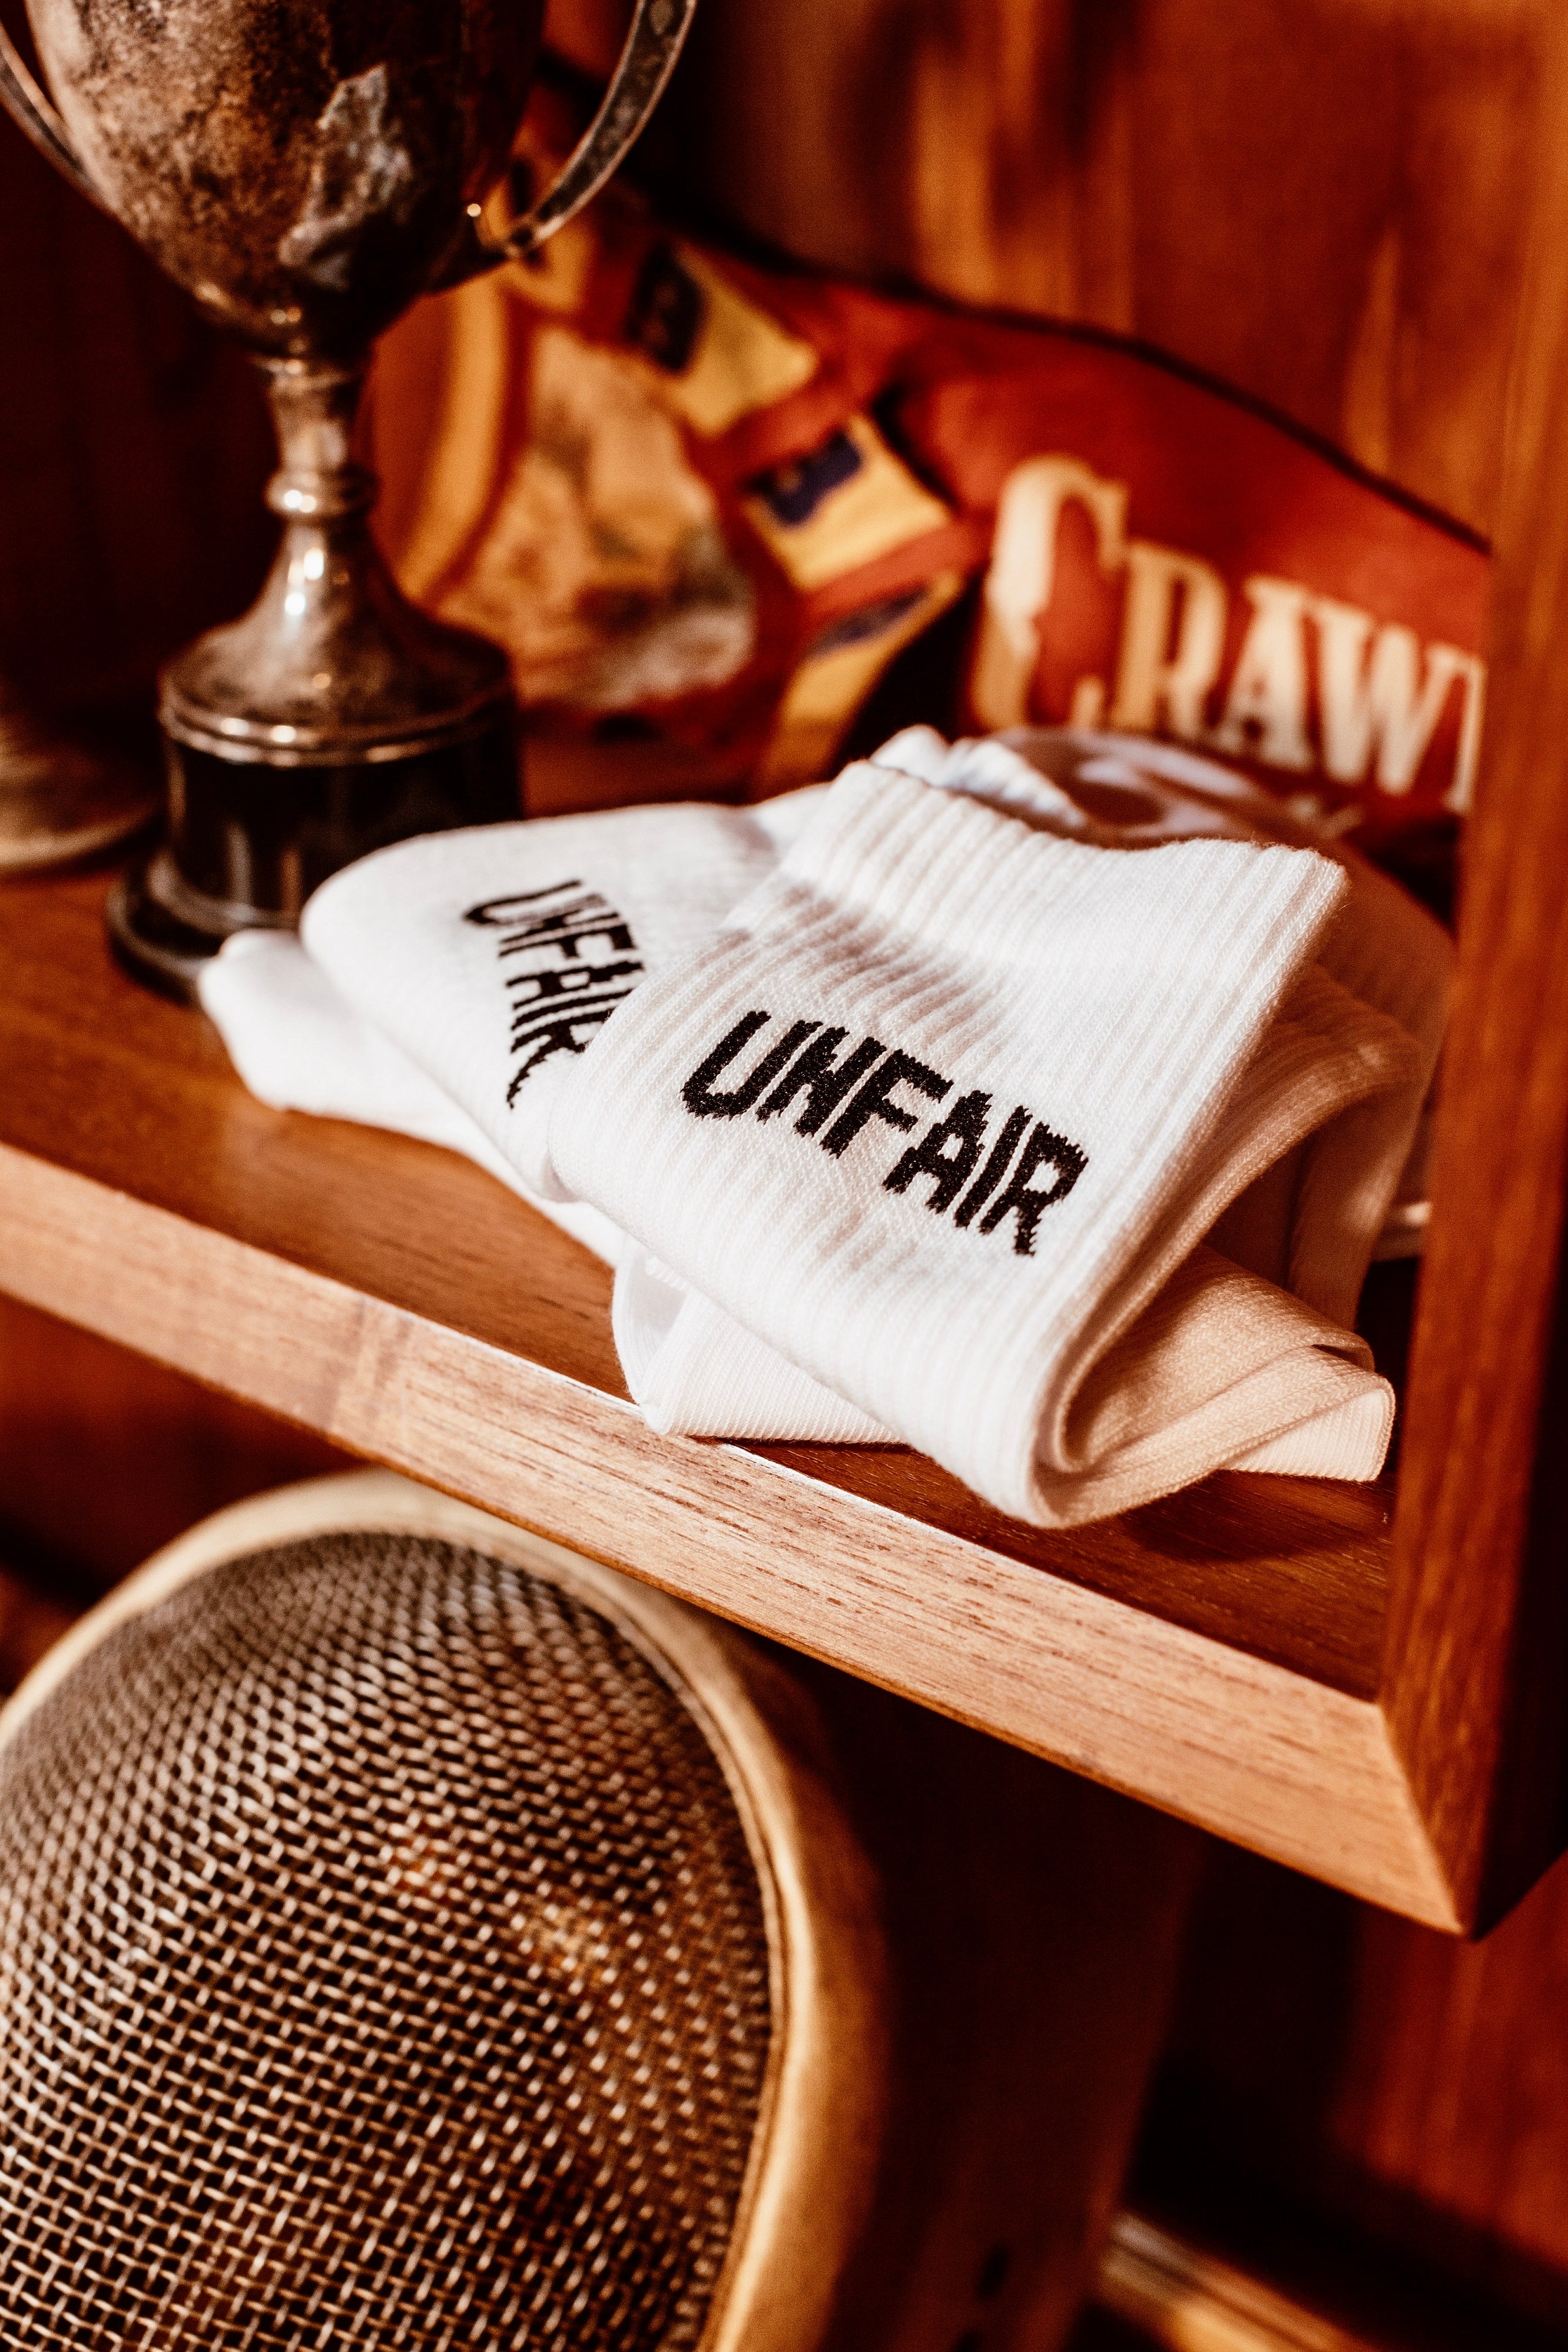 Unfair Athletics Unfair Socks (white) - Blue Mountain Store